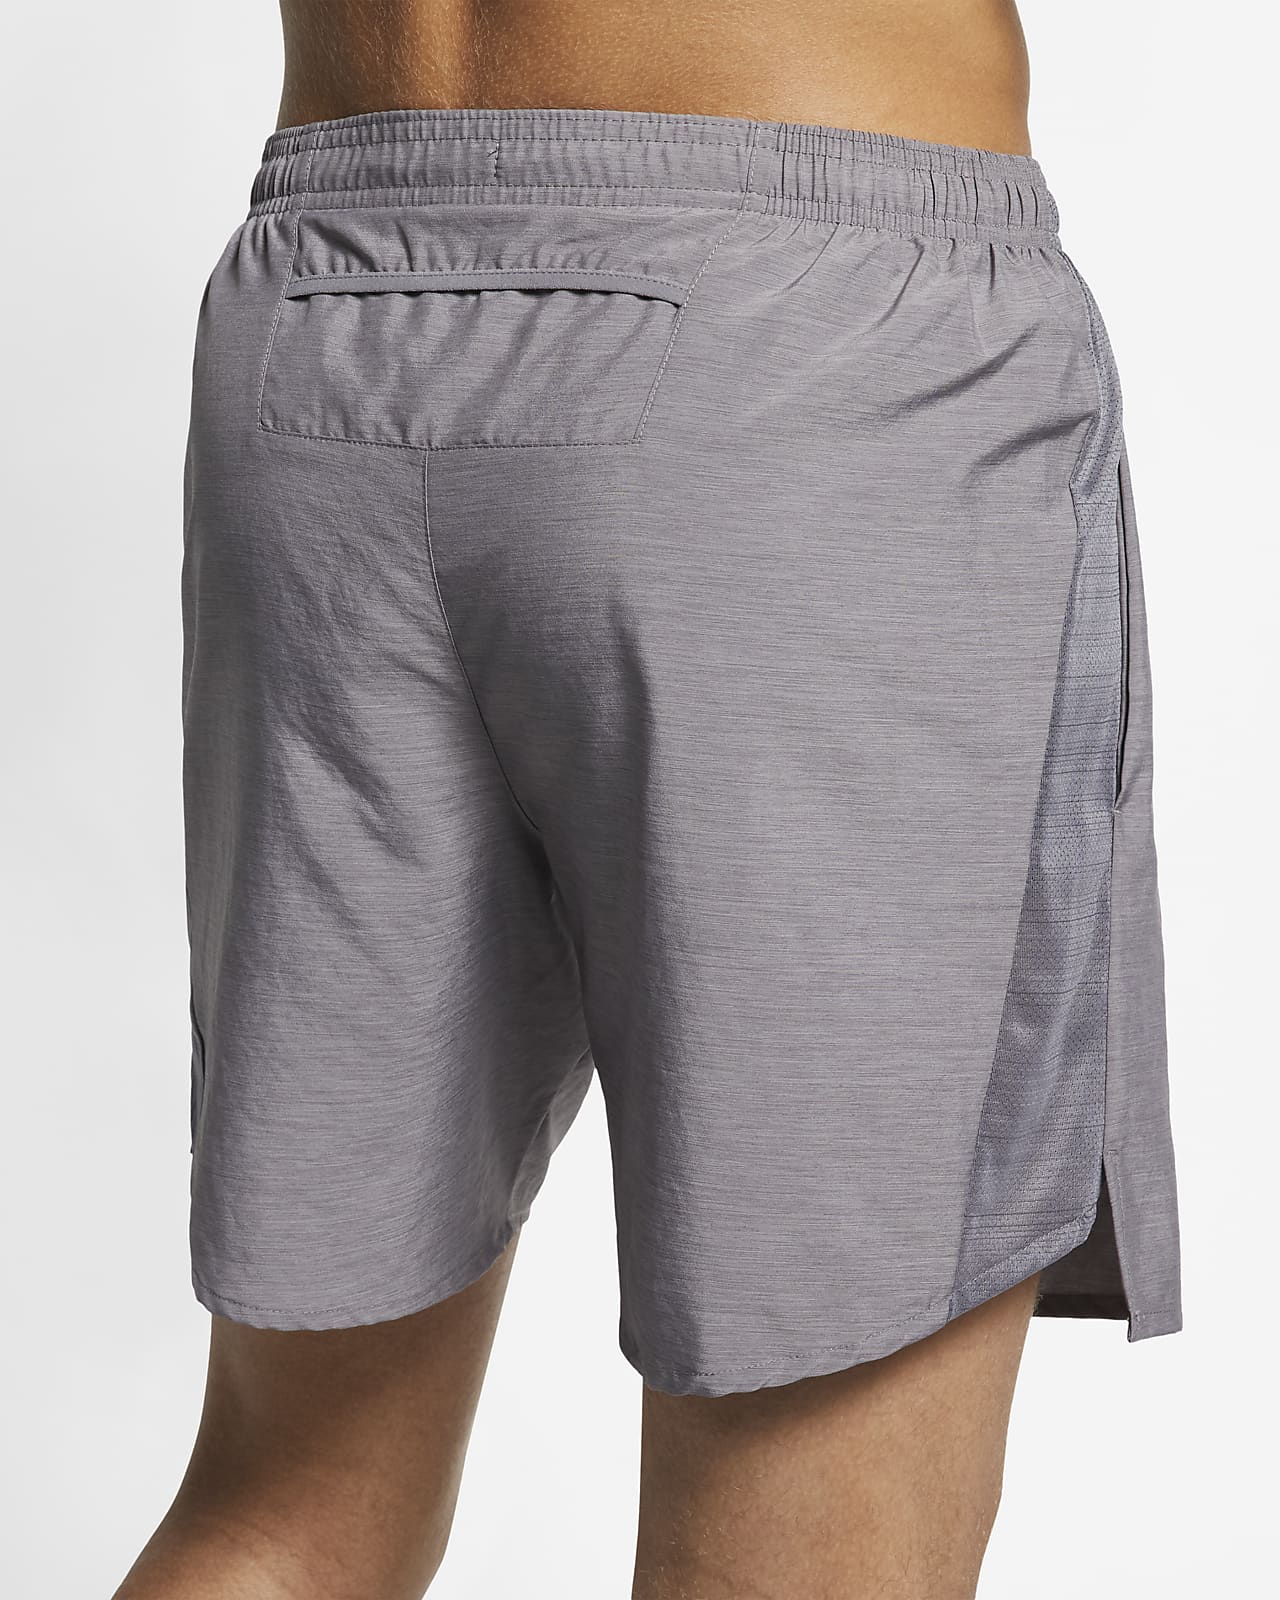 nike men's challenger shorts 7 inch